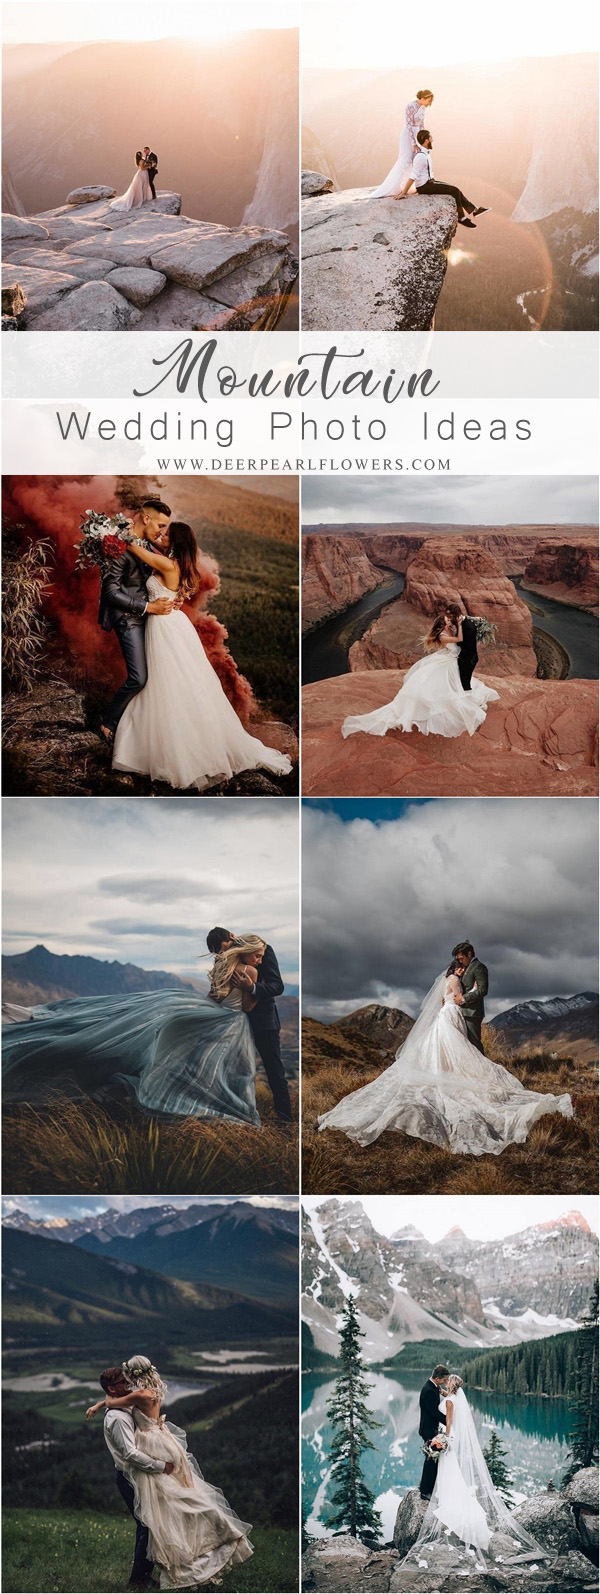 Mountain wedding photography tips and ideas